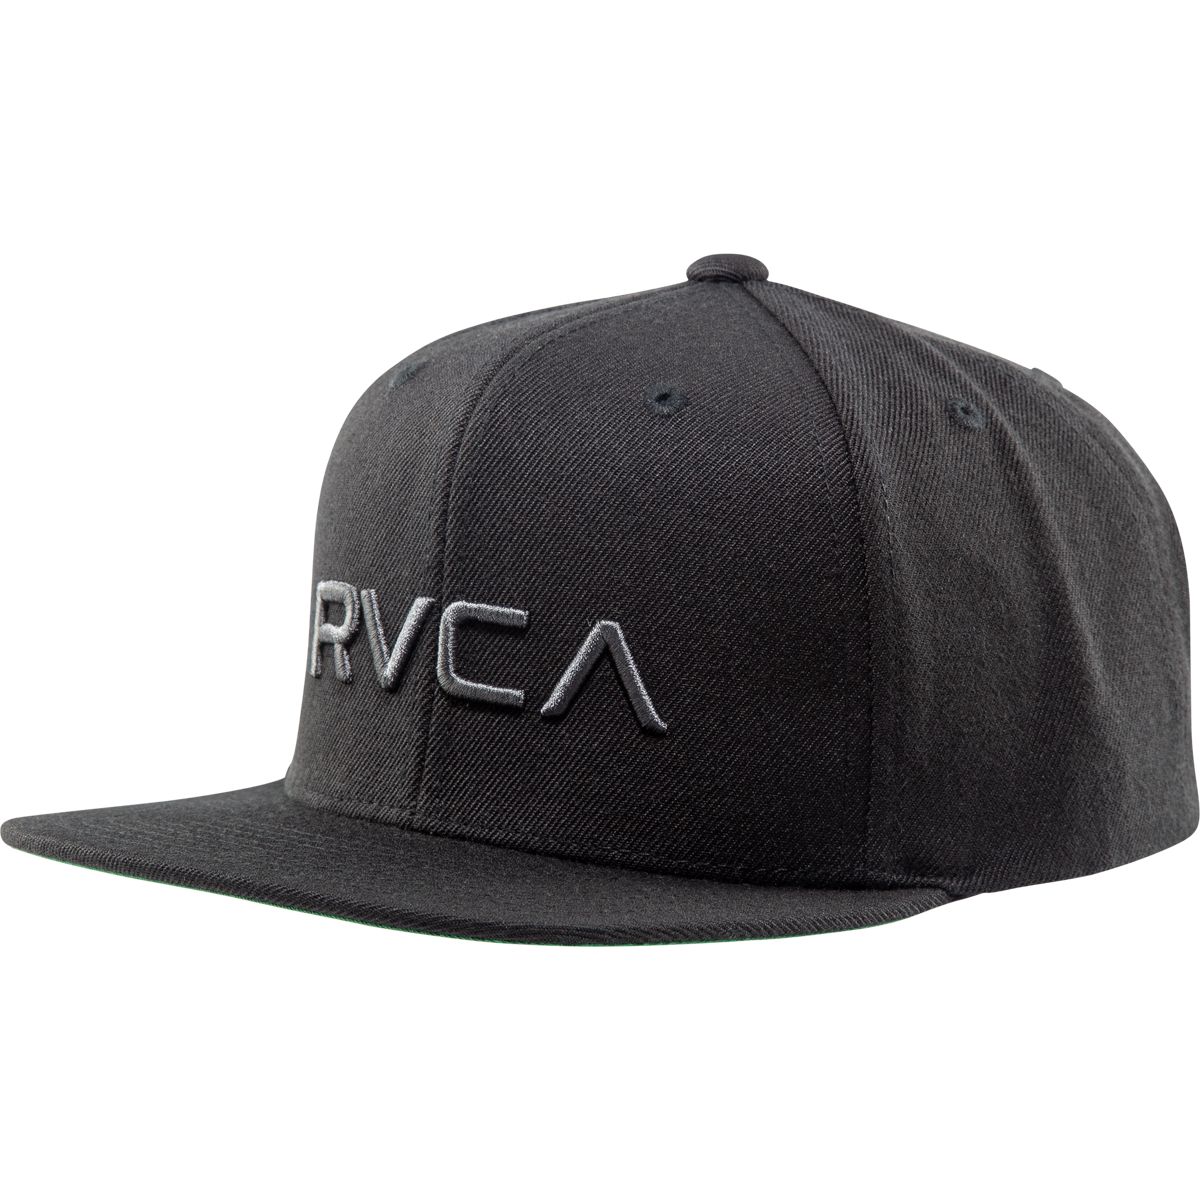 Image of Rvca Boys' Twill Snapback Hat